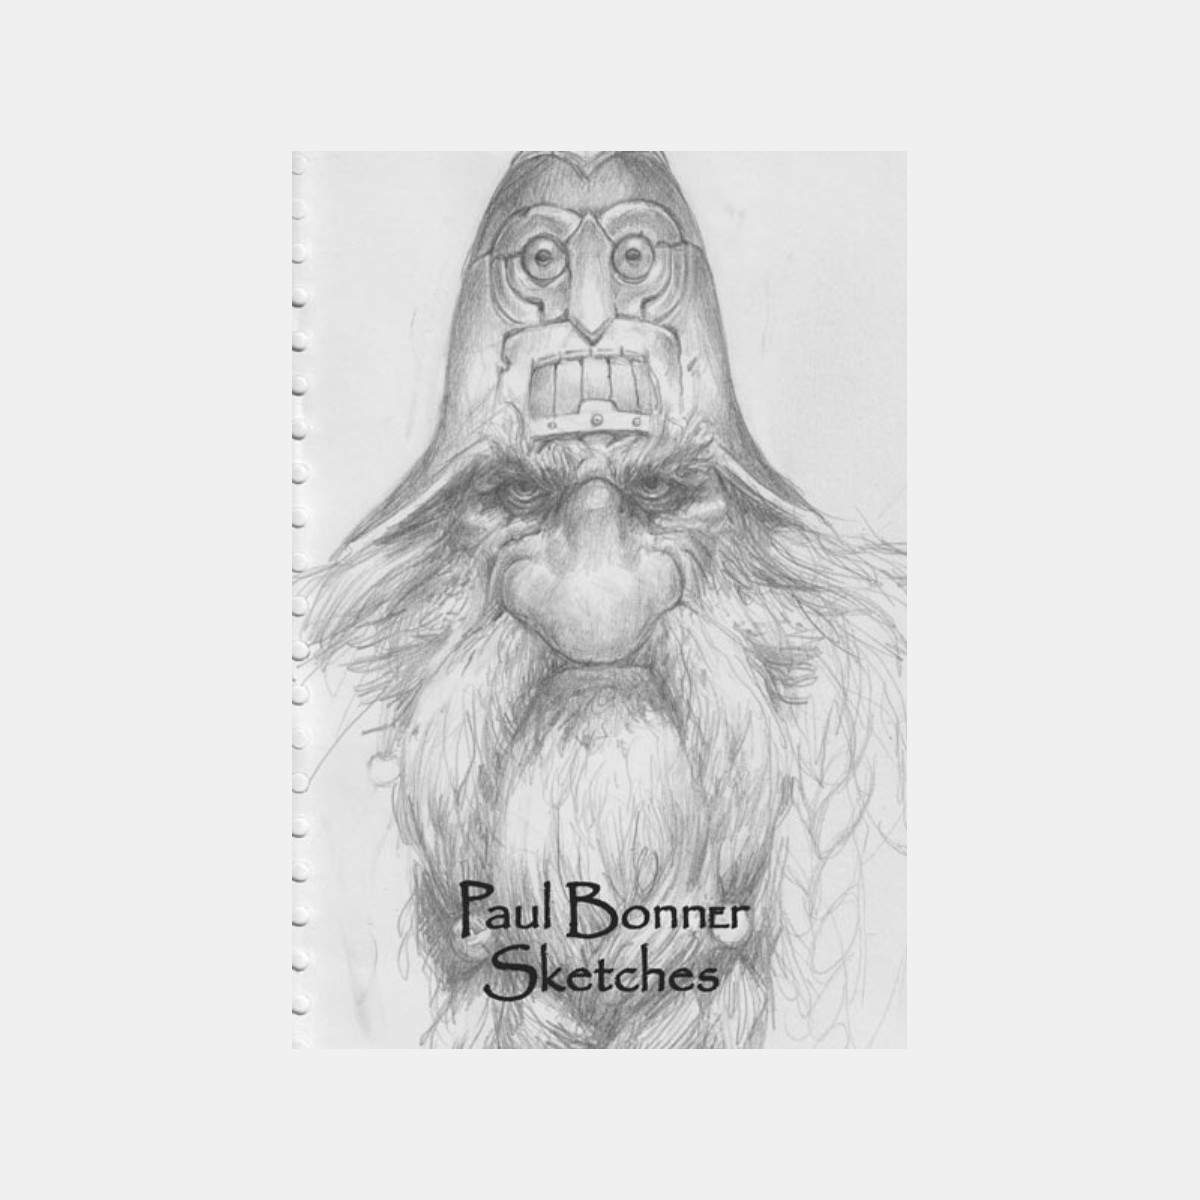 Paul Bonner - Sketches - Signed